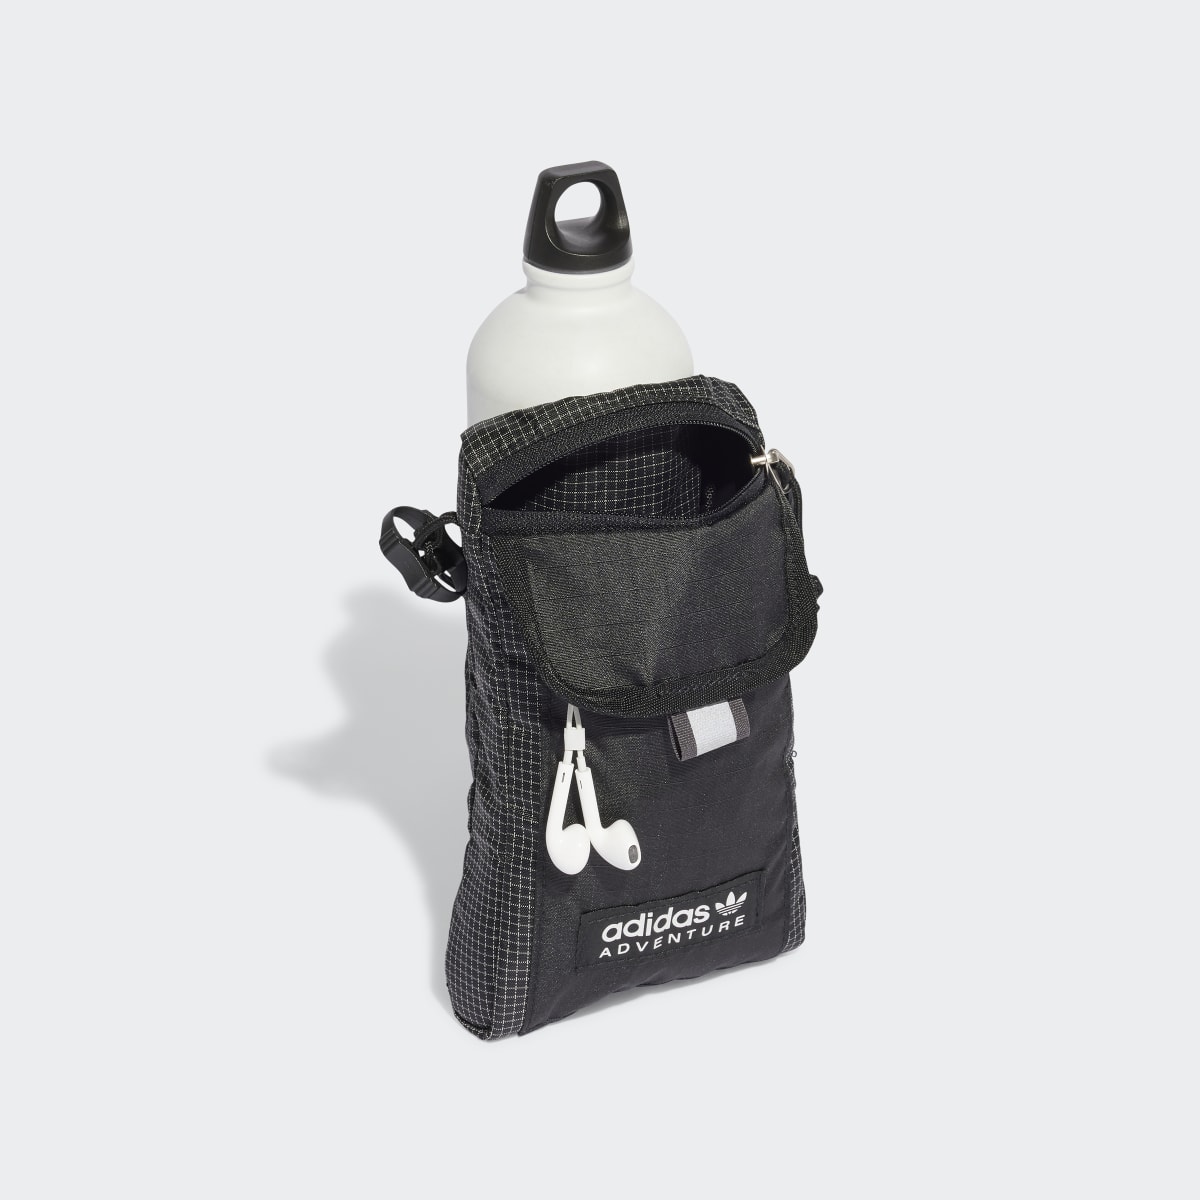 Adidas Adventure Flag Bag Small. 5